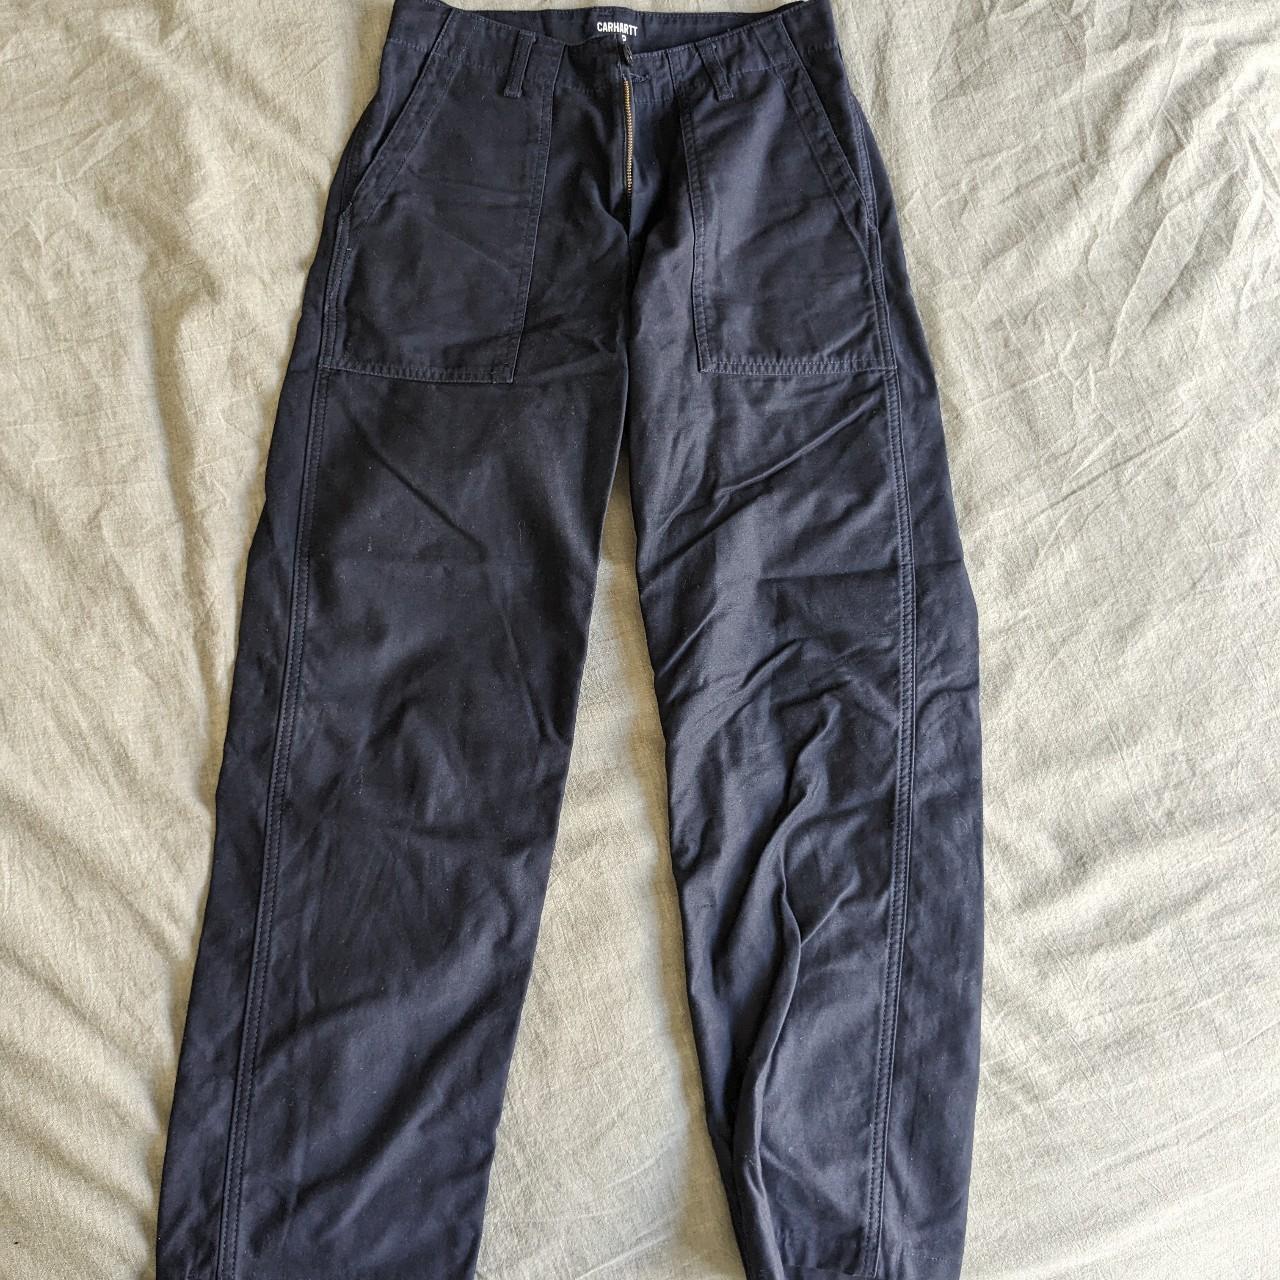 Carharrt pants size 28 - Depop